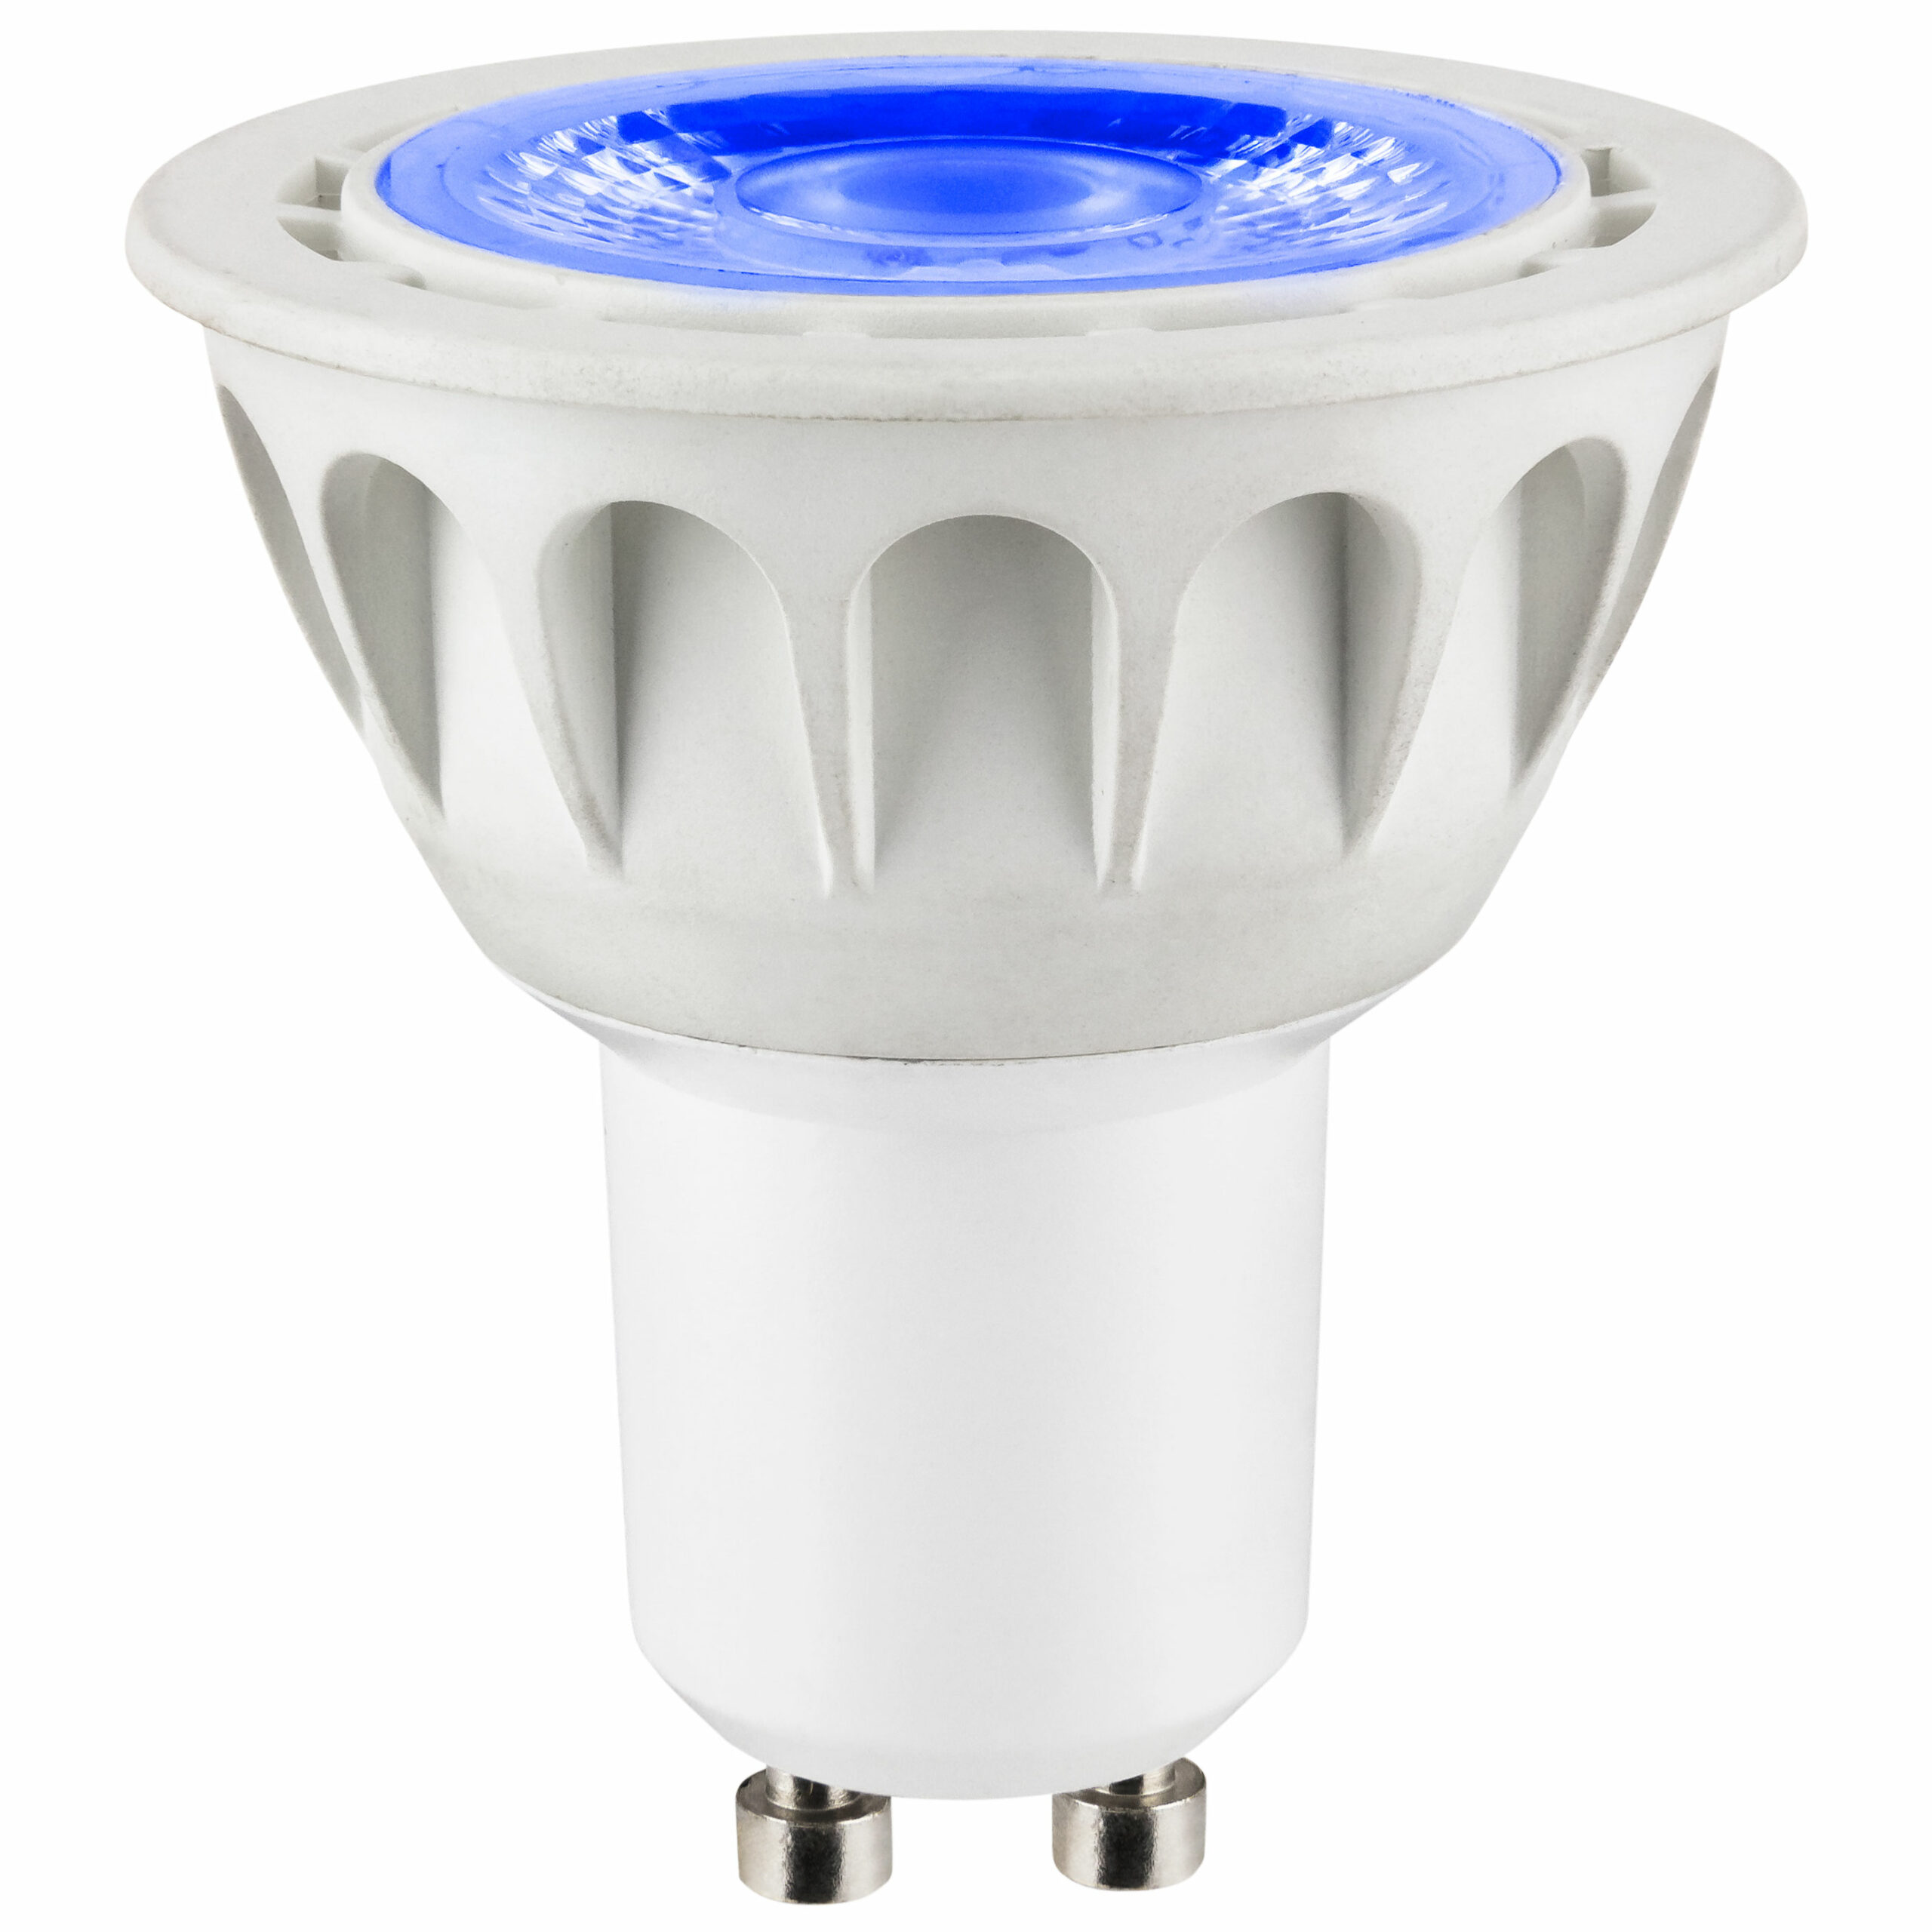 LED PAR16 Light Bulb, Blue 3 Watts (25W Equivalent), GU10 Base